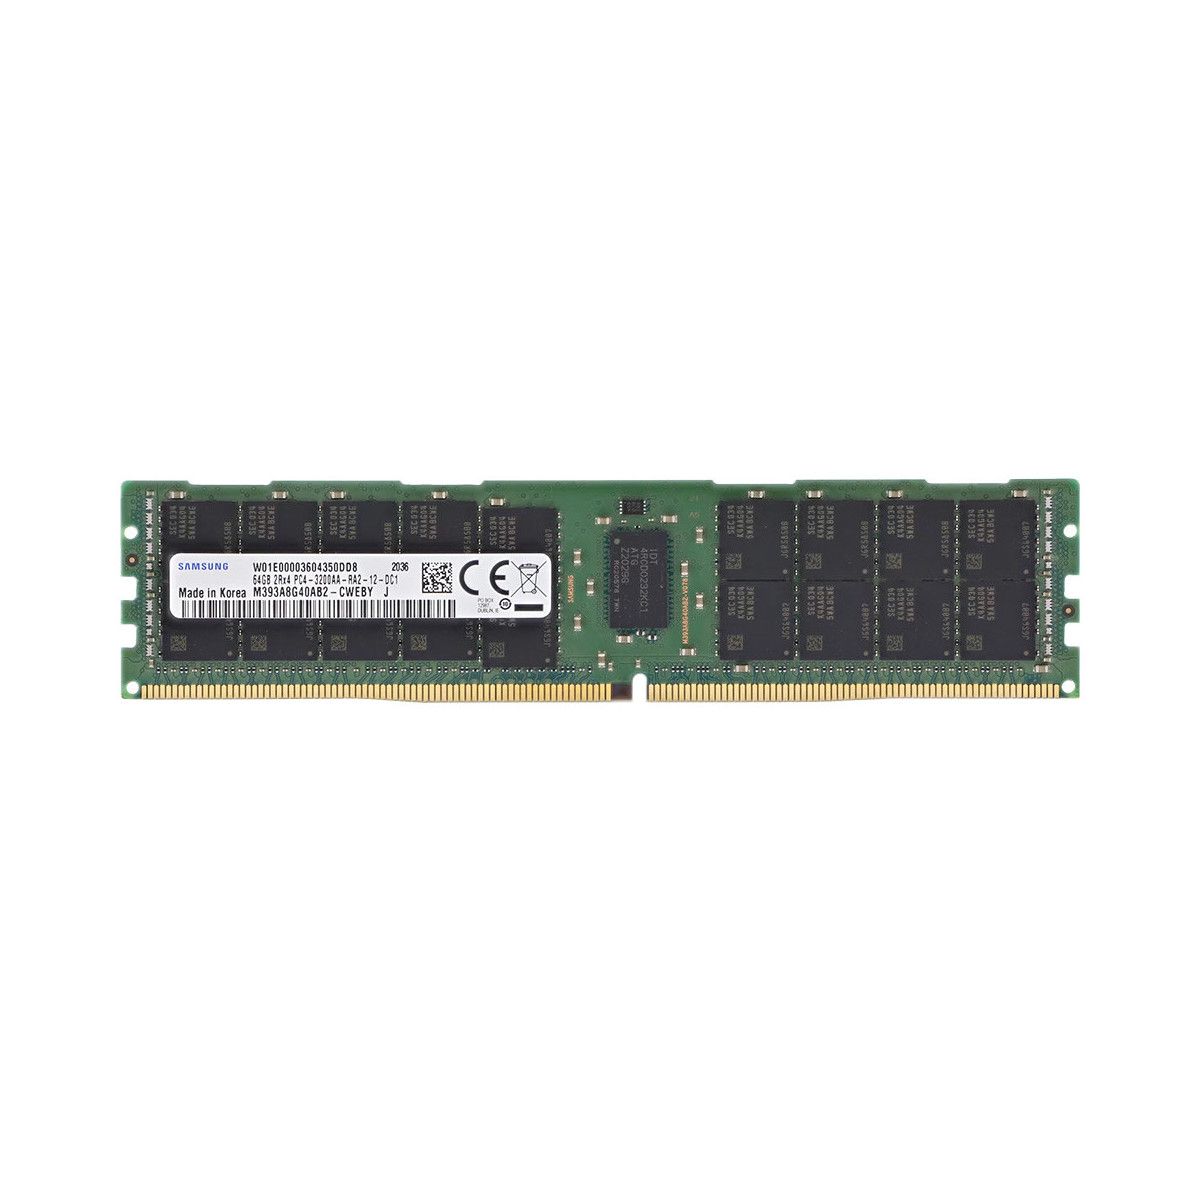 P43170‐B21-MS - Memstar 1x 64GB DDR4-3200 RDIMM PC4-25600R - Mem-star Compatible OEM Memoria 1 - Memstar 